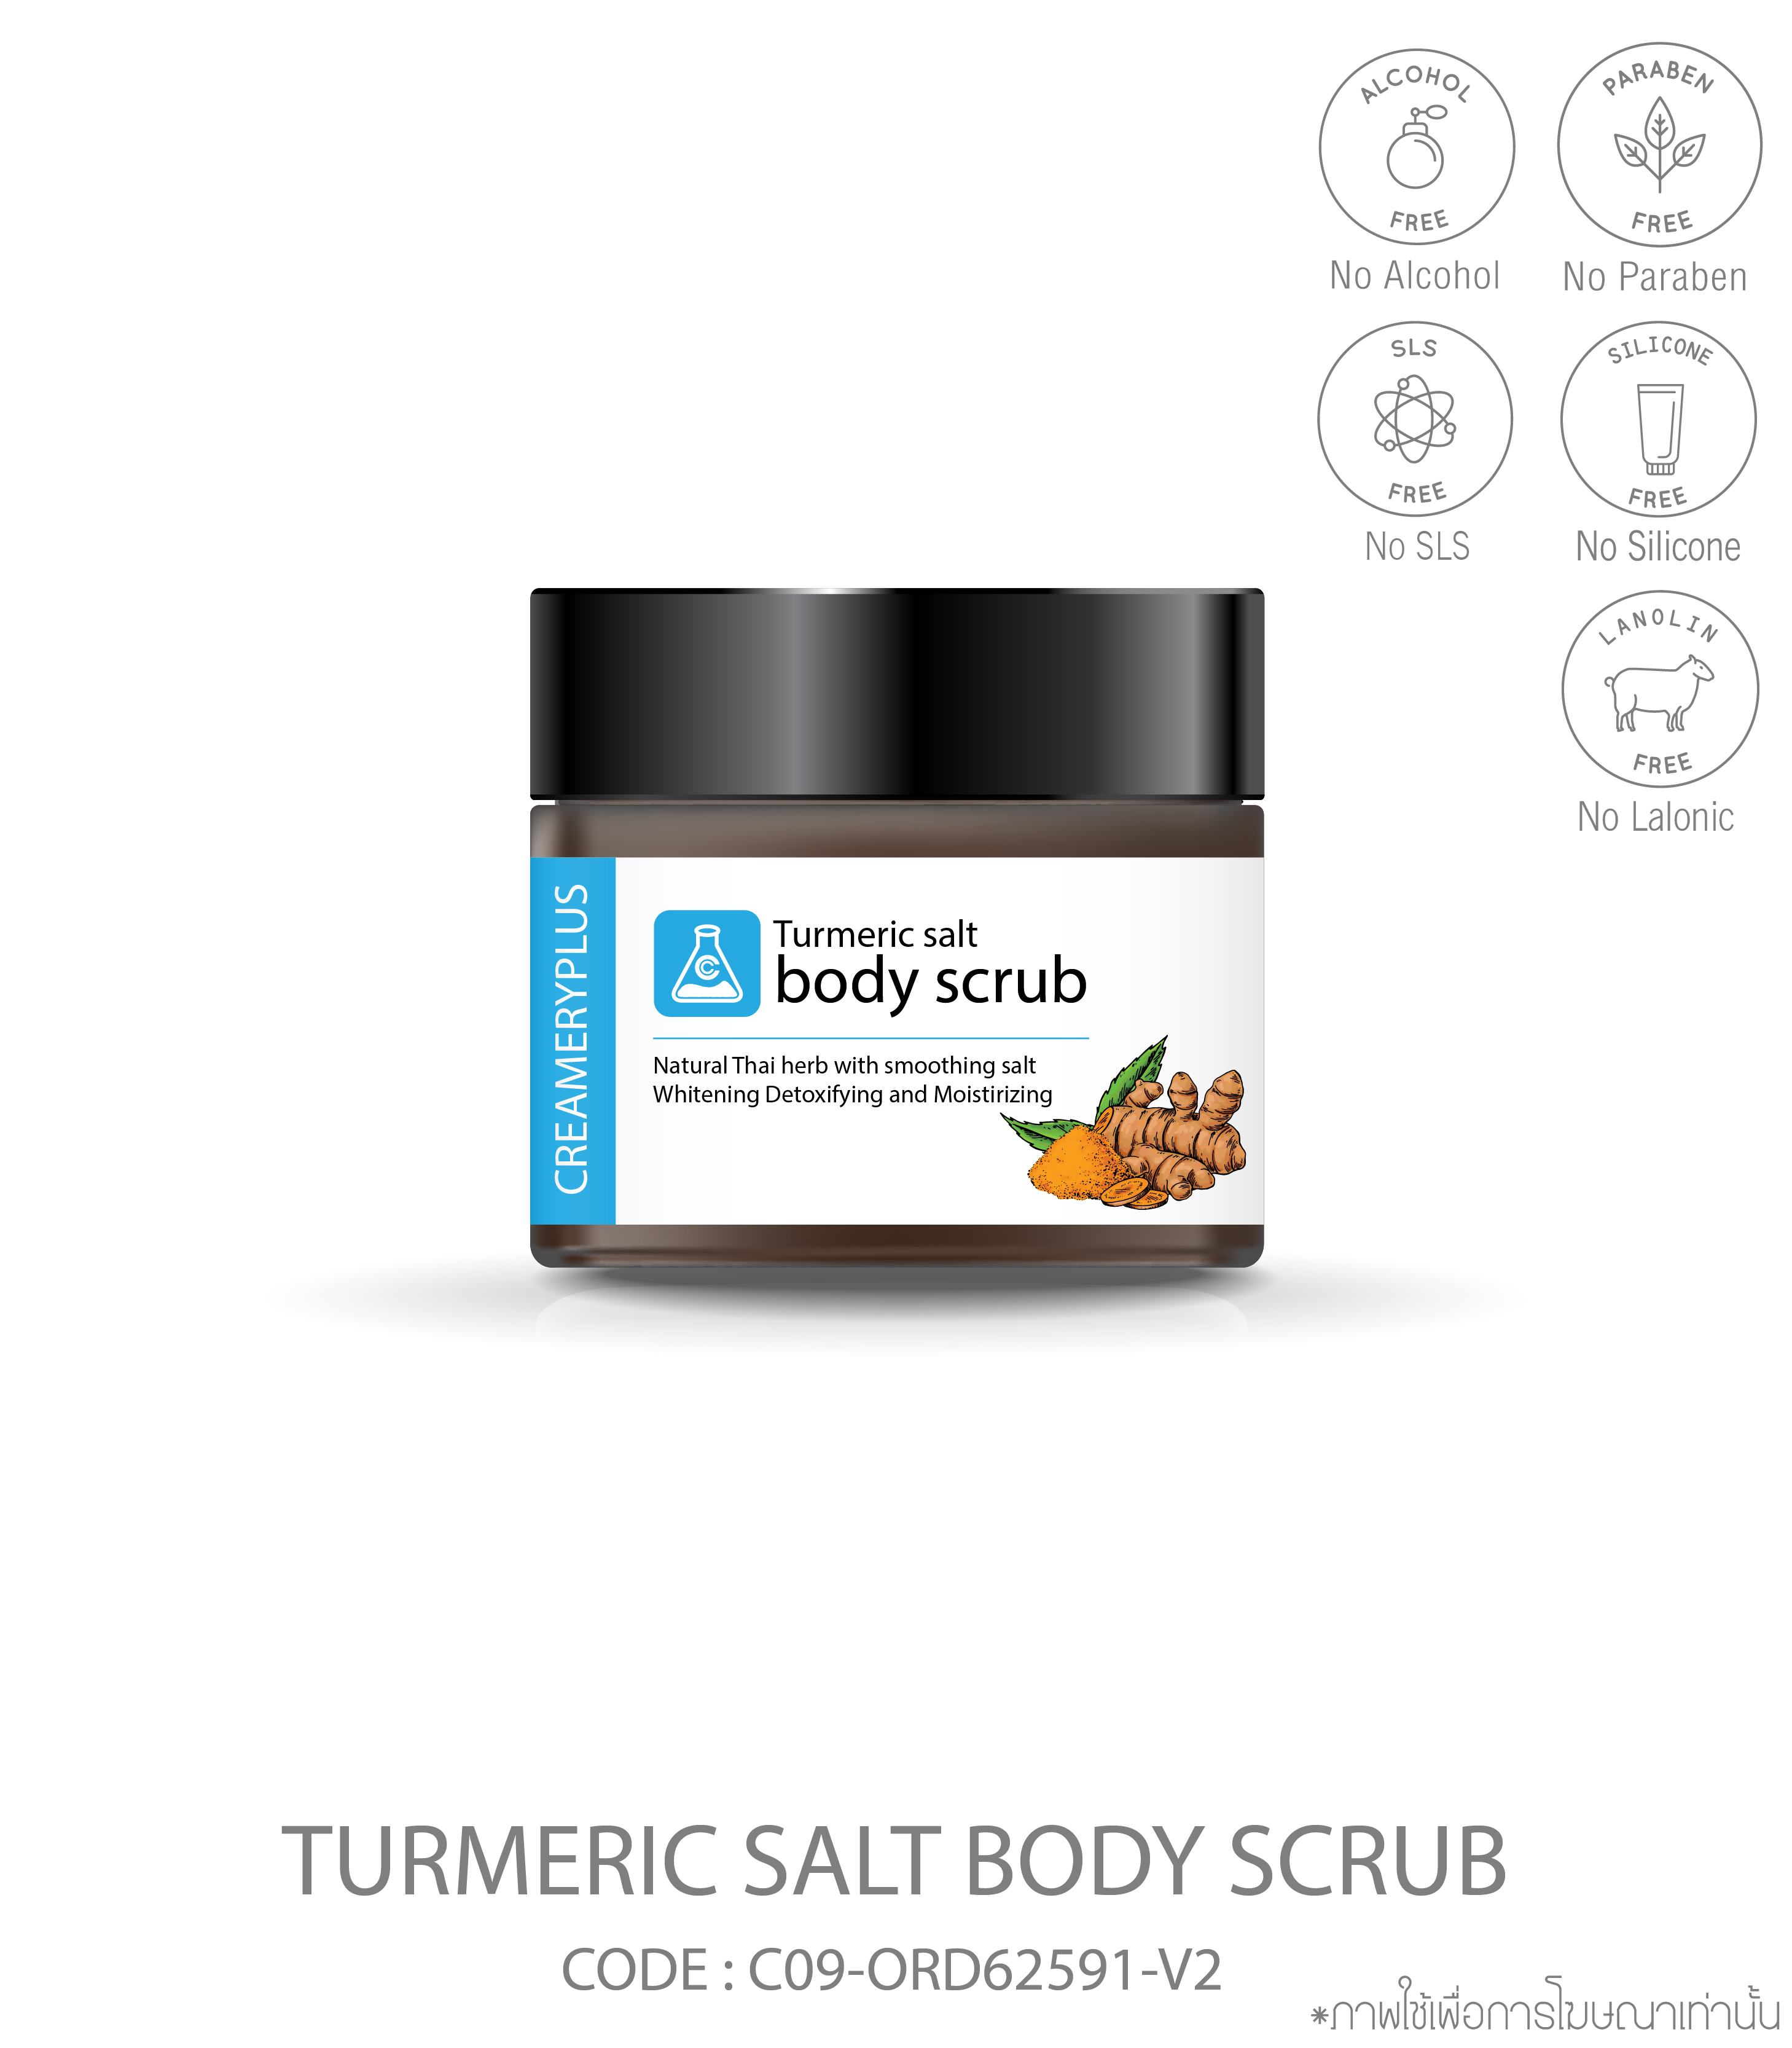 Turmeric salt body scrub